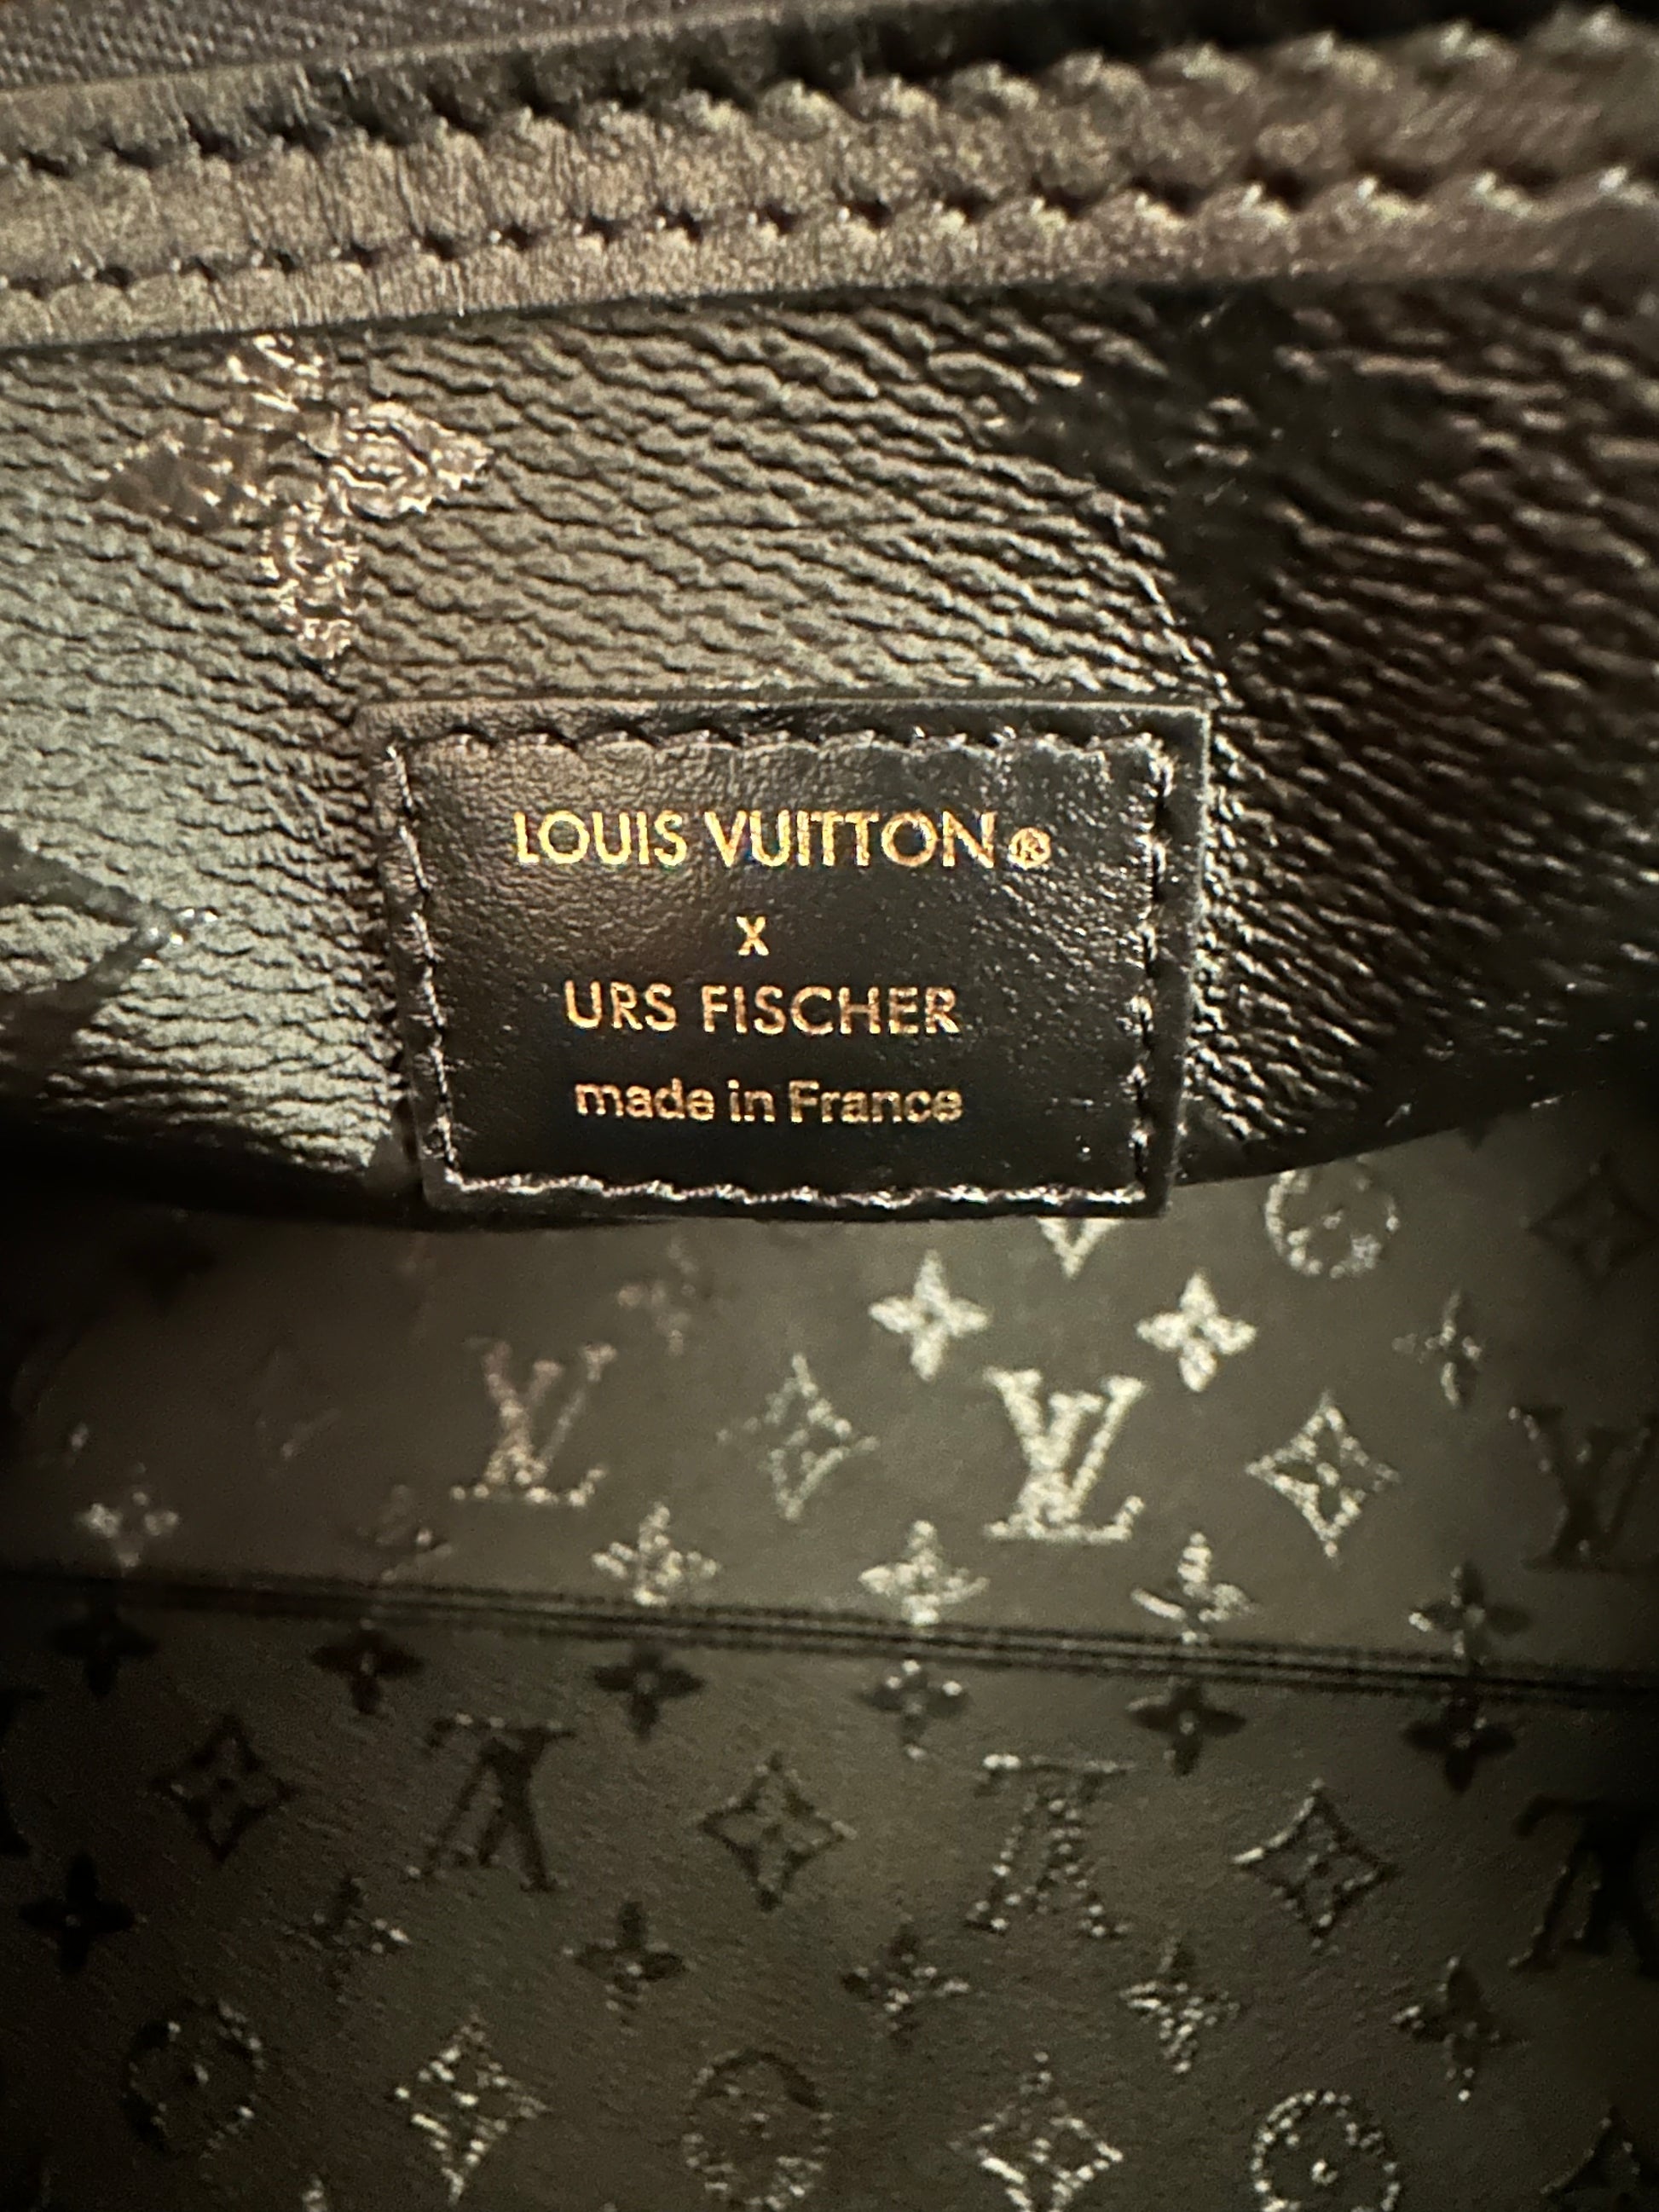 shopping with my Louis Vuitton x Urs Fischer Speedy. I love the